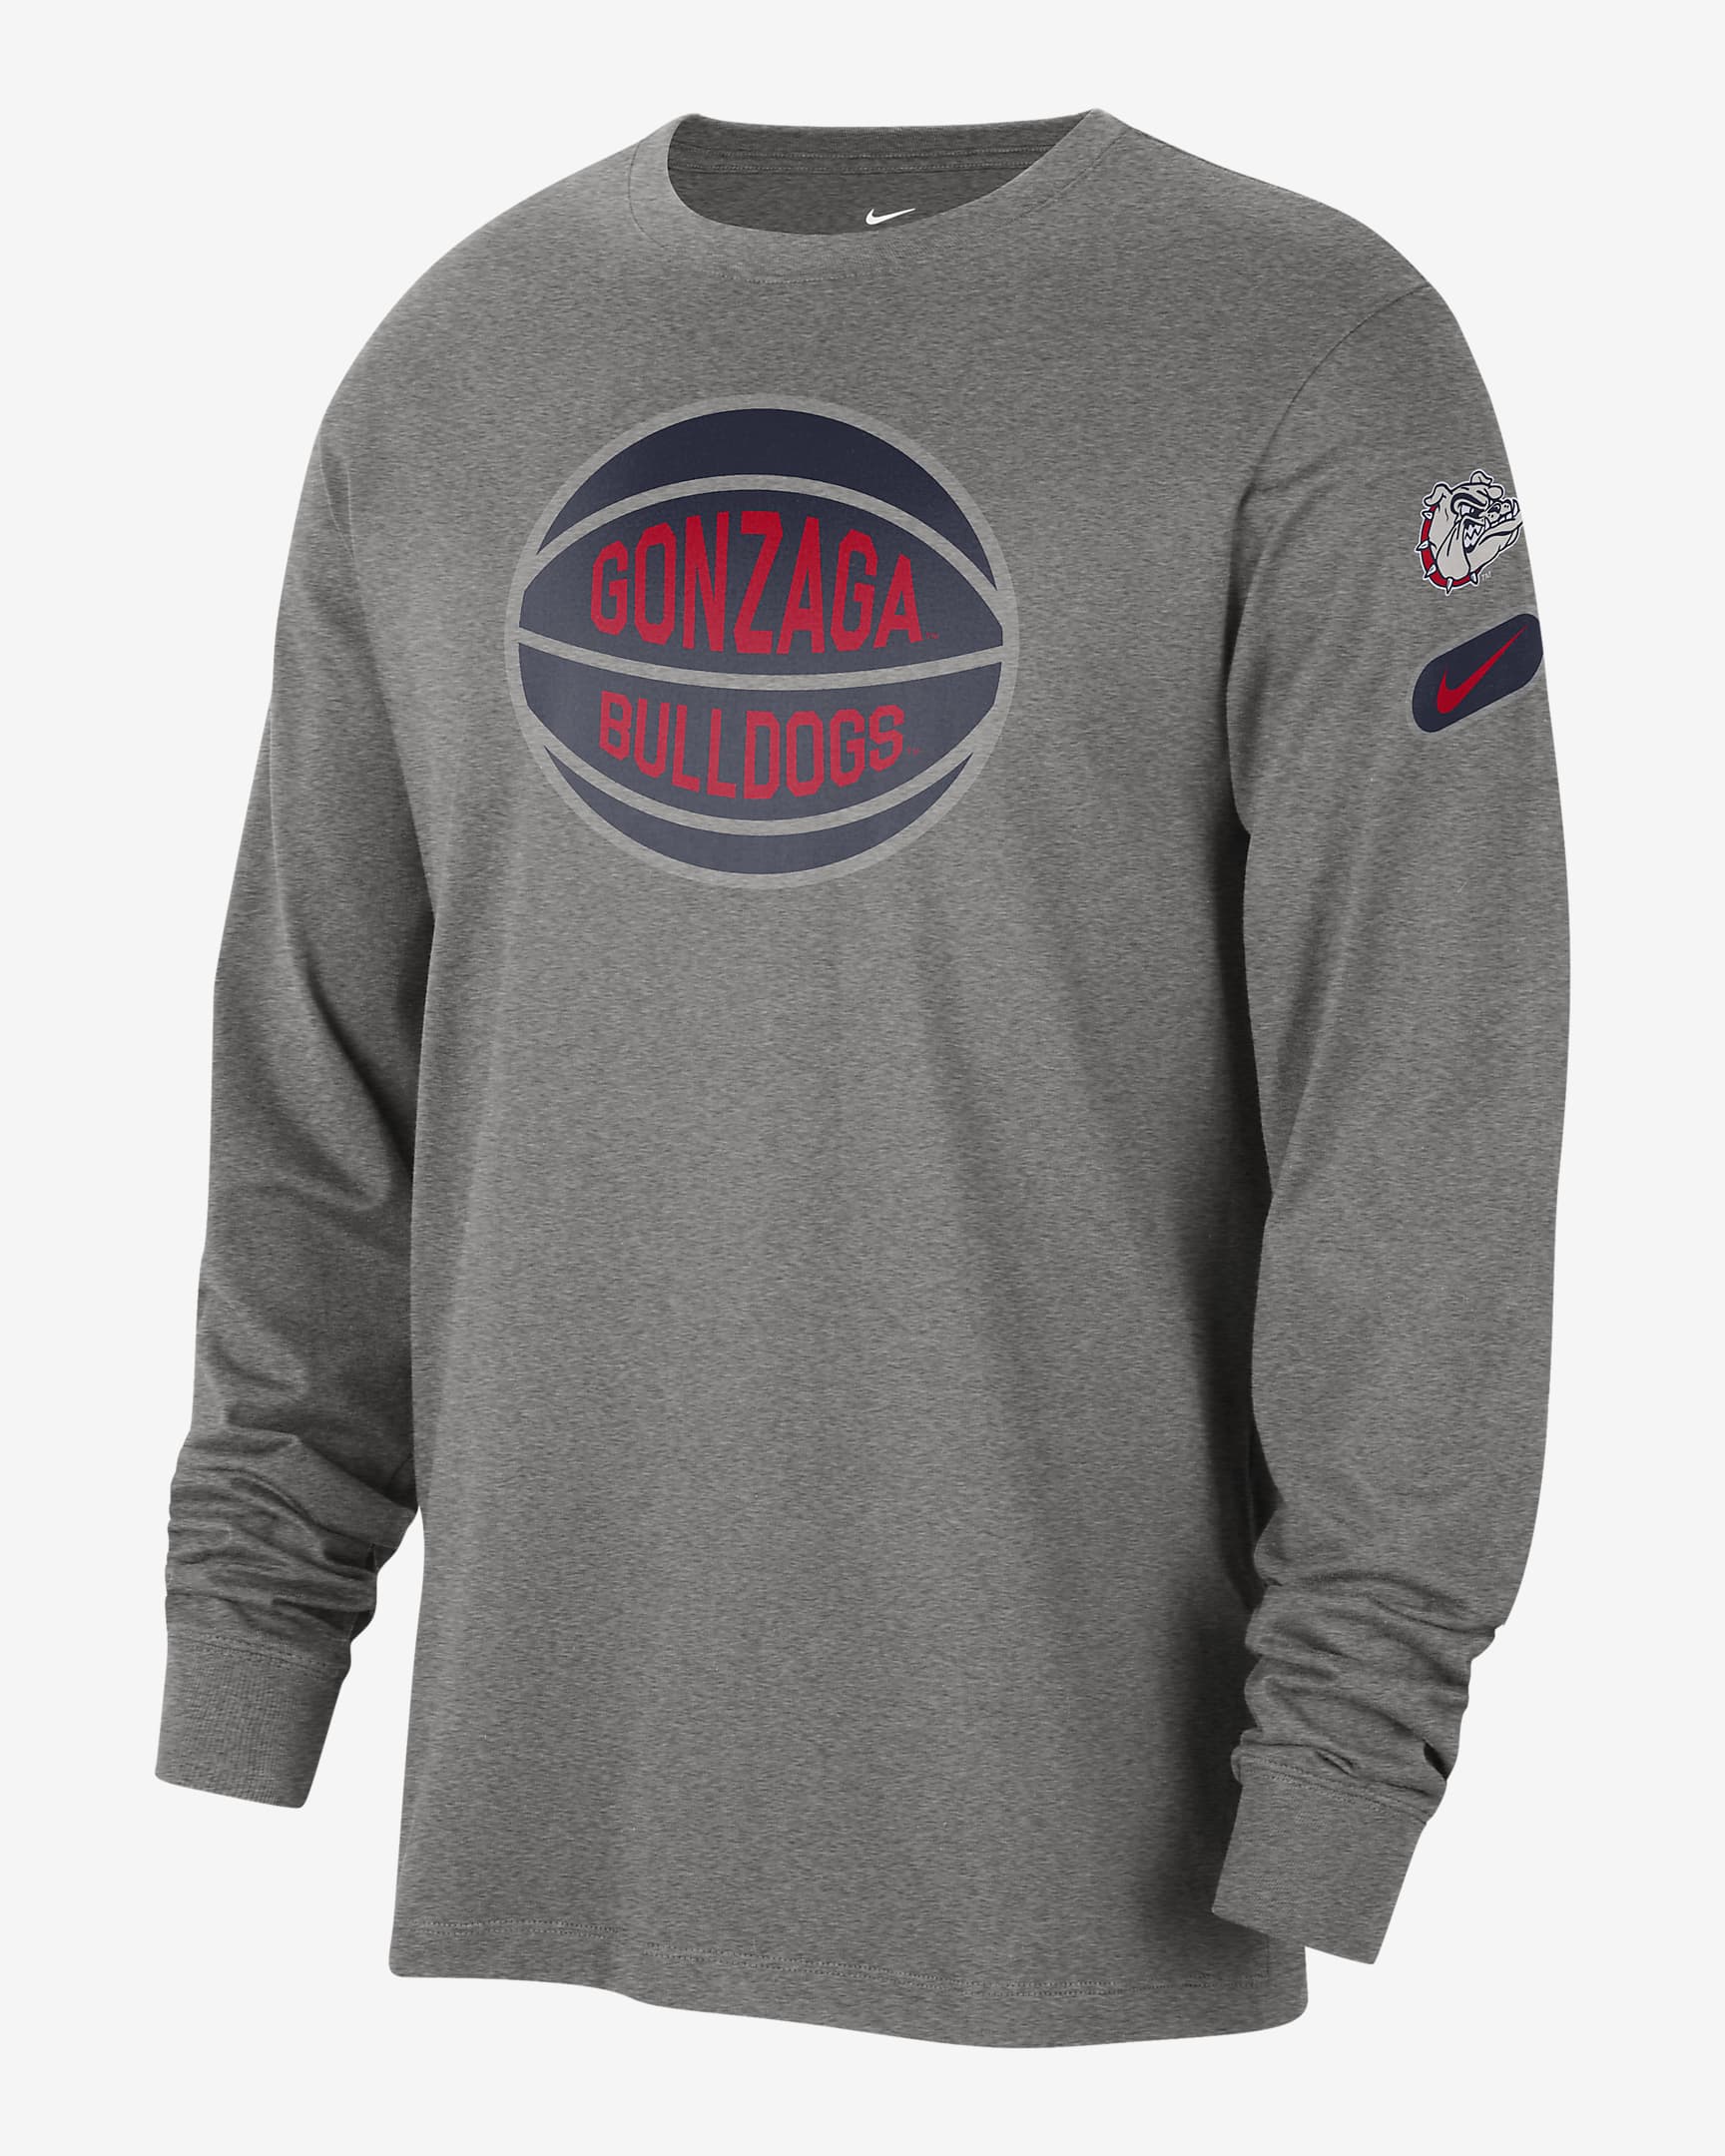 Gonzaga Fast Break Men's Nike College Long-Sleeve T-Shirt. Nike.com